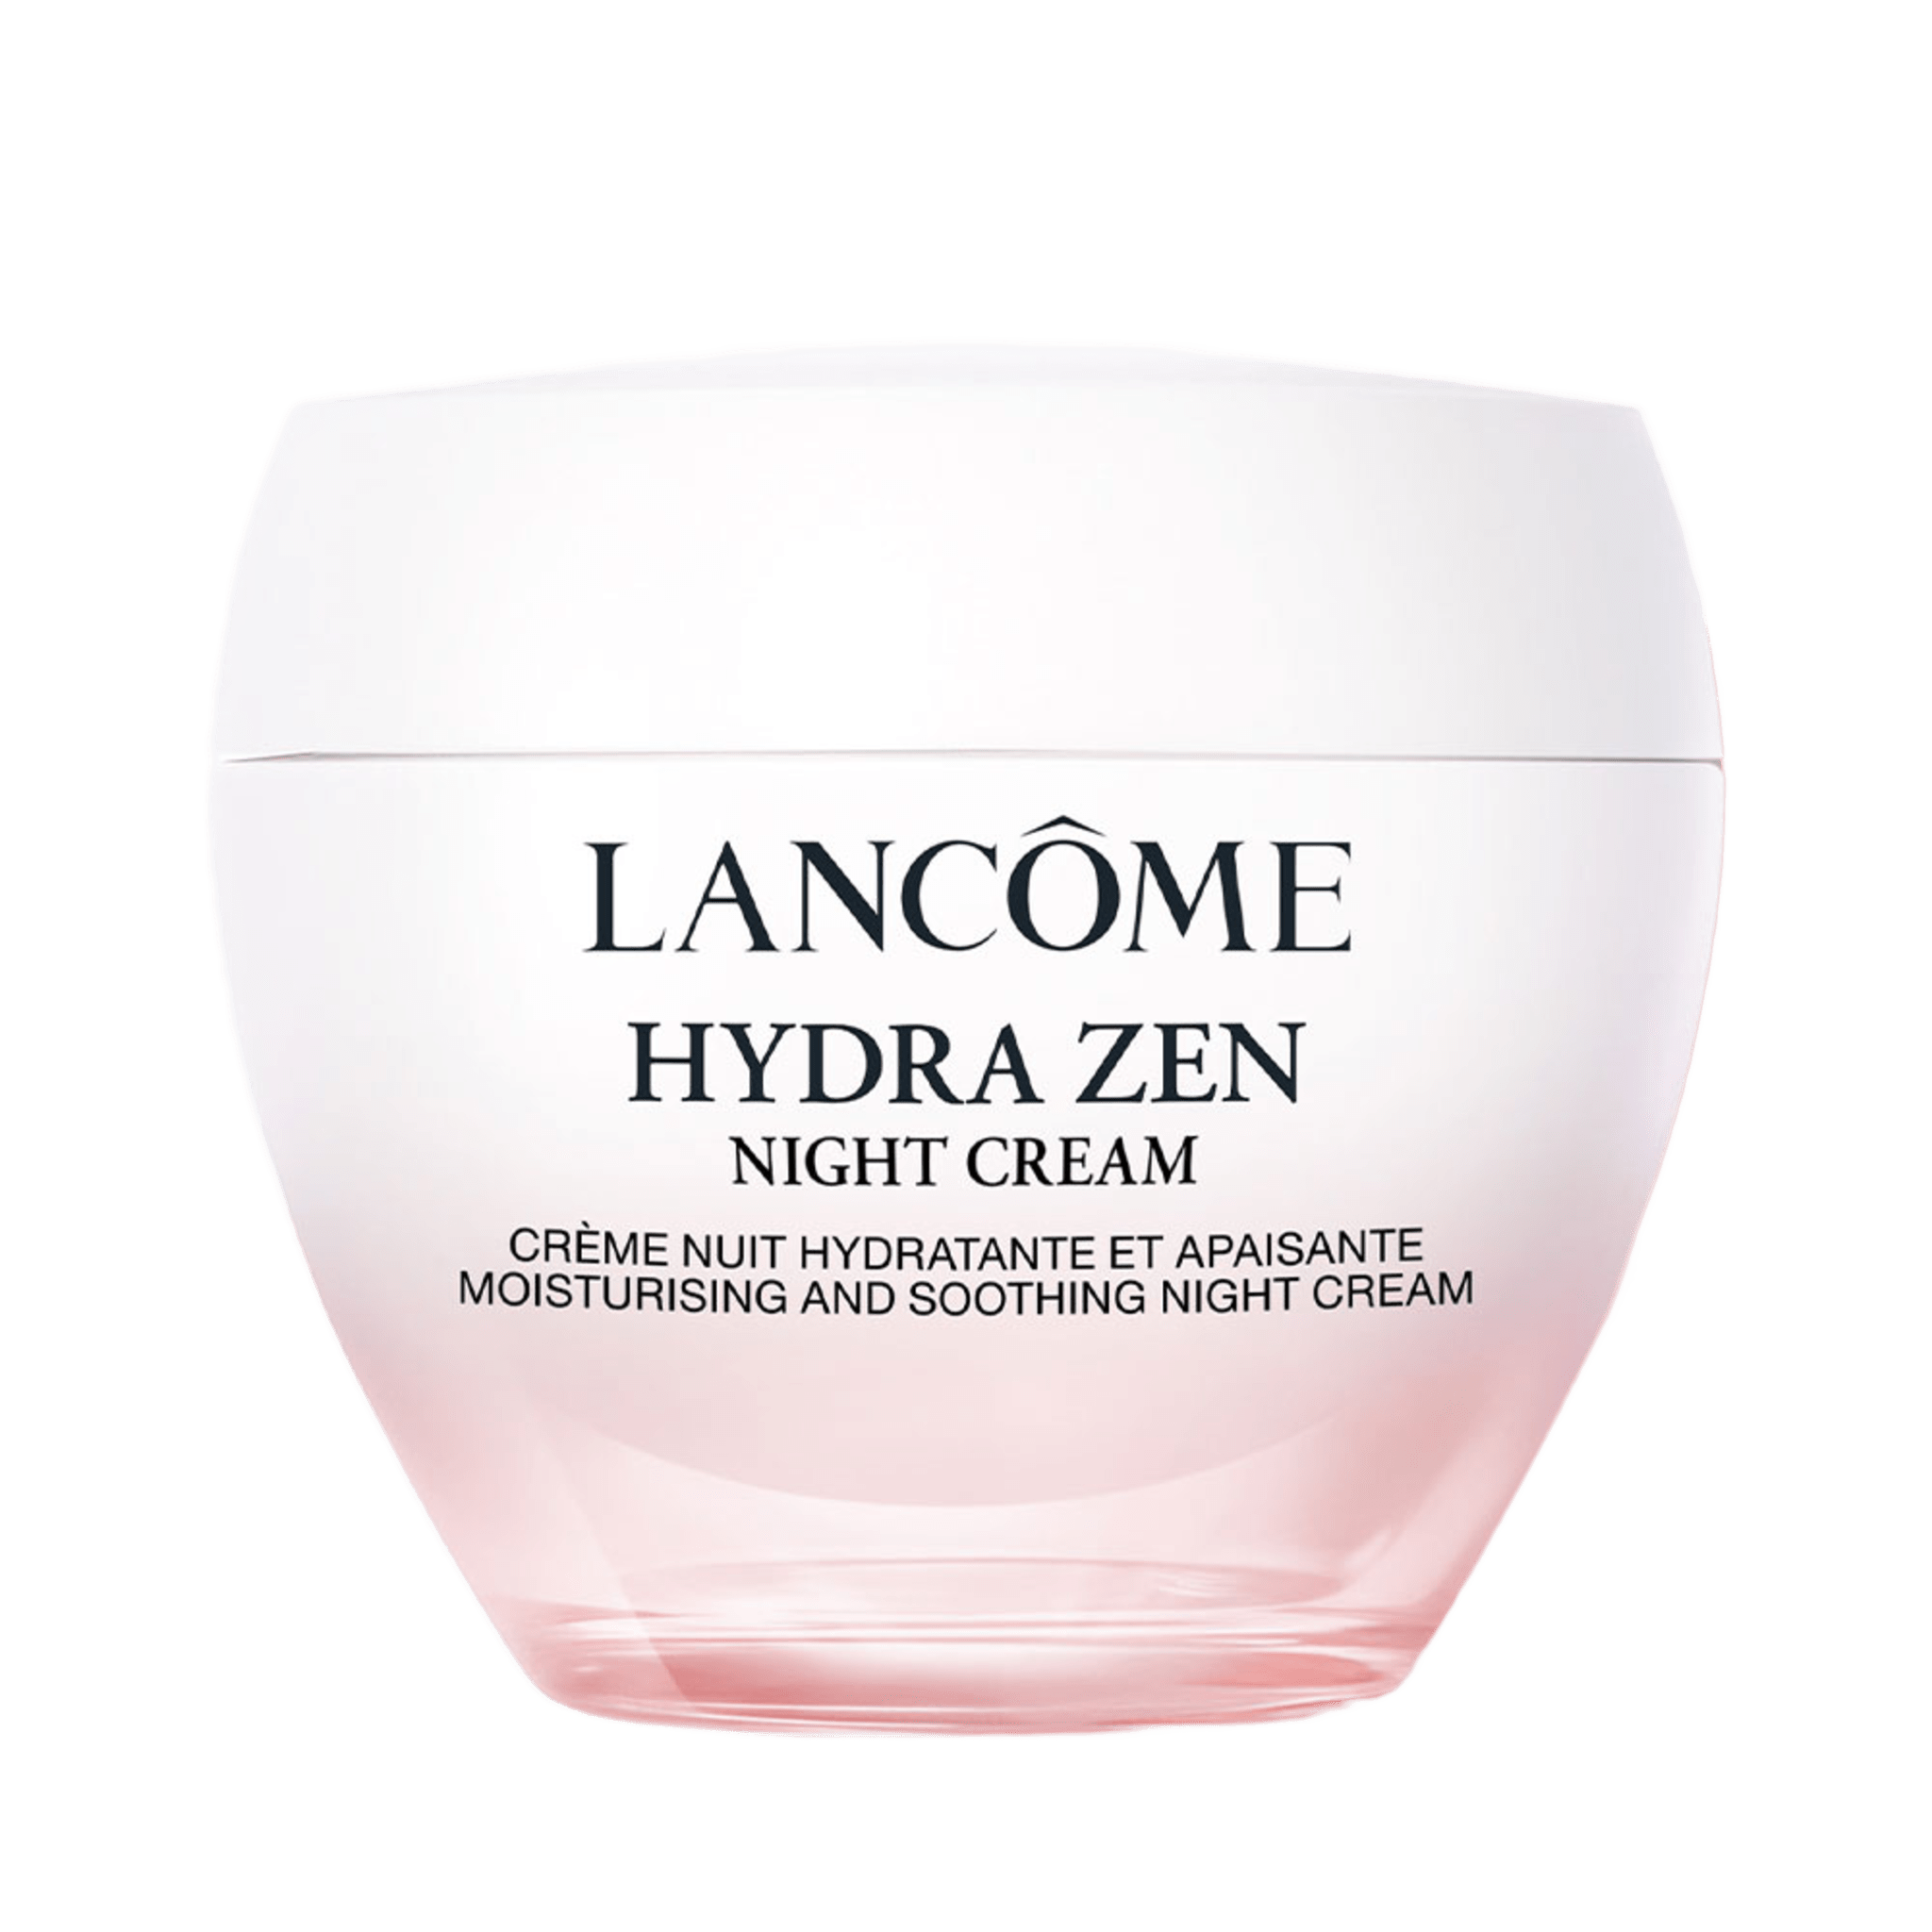 Lancôme från Hydra Cream Zen | Åhlens Night